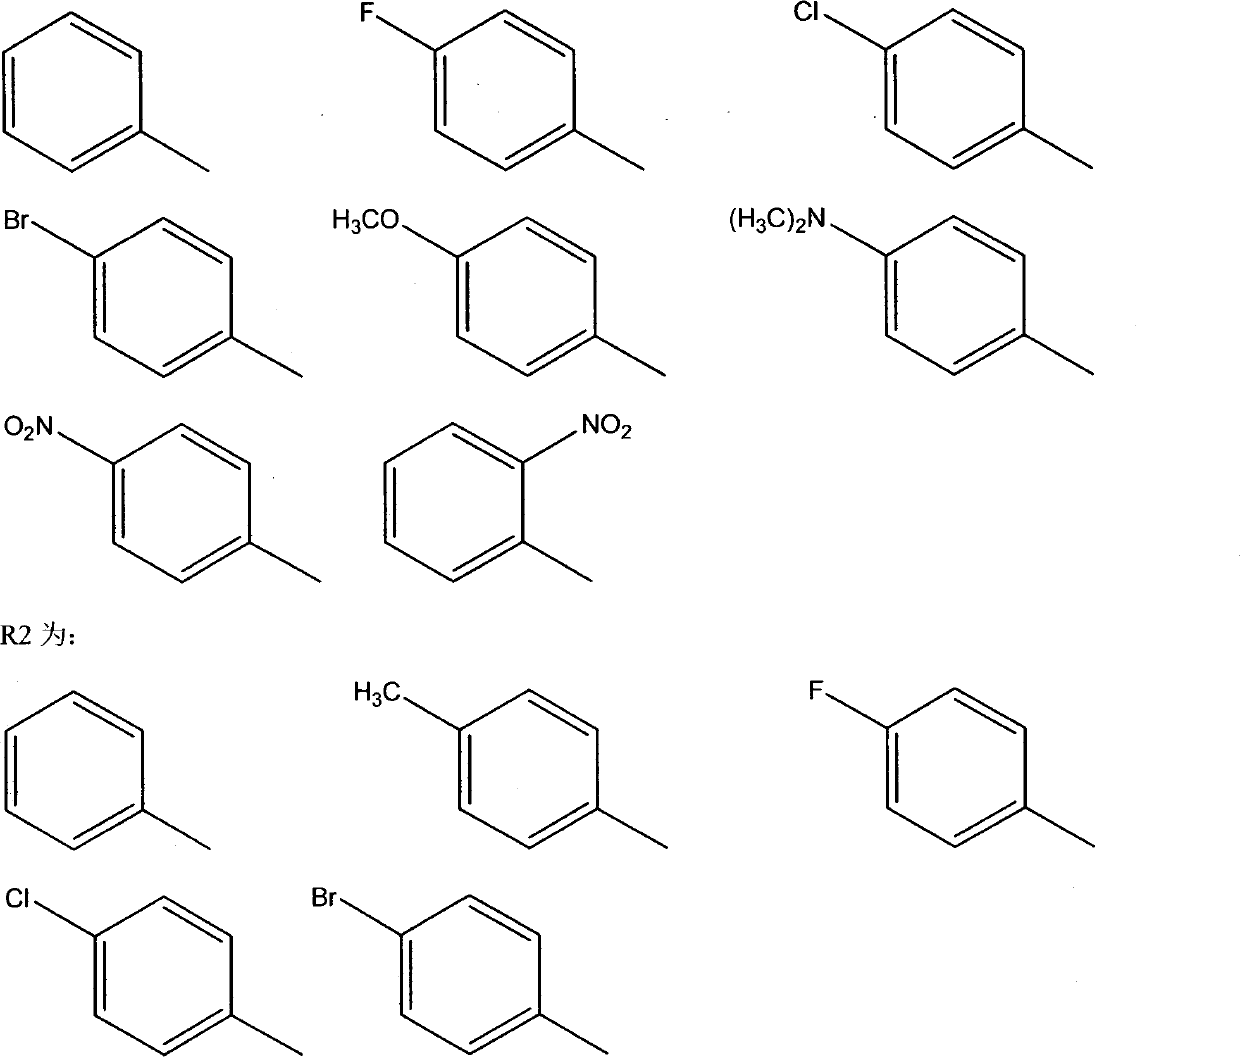 Cinnamoyl sulfonamide compound preparation and applications of cinnamoyl sulfonamide compounds in anti-tumor treatment drugs